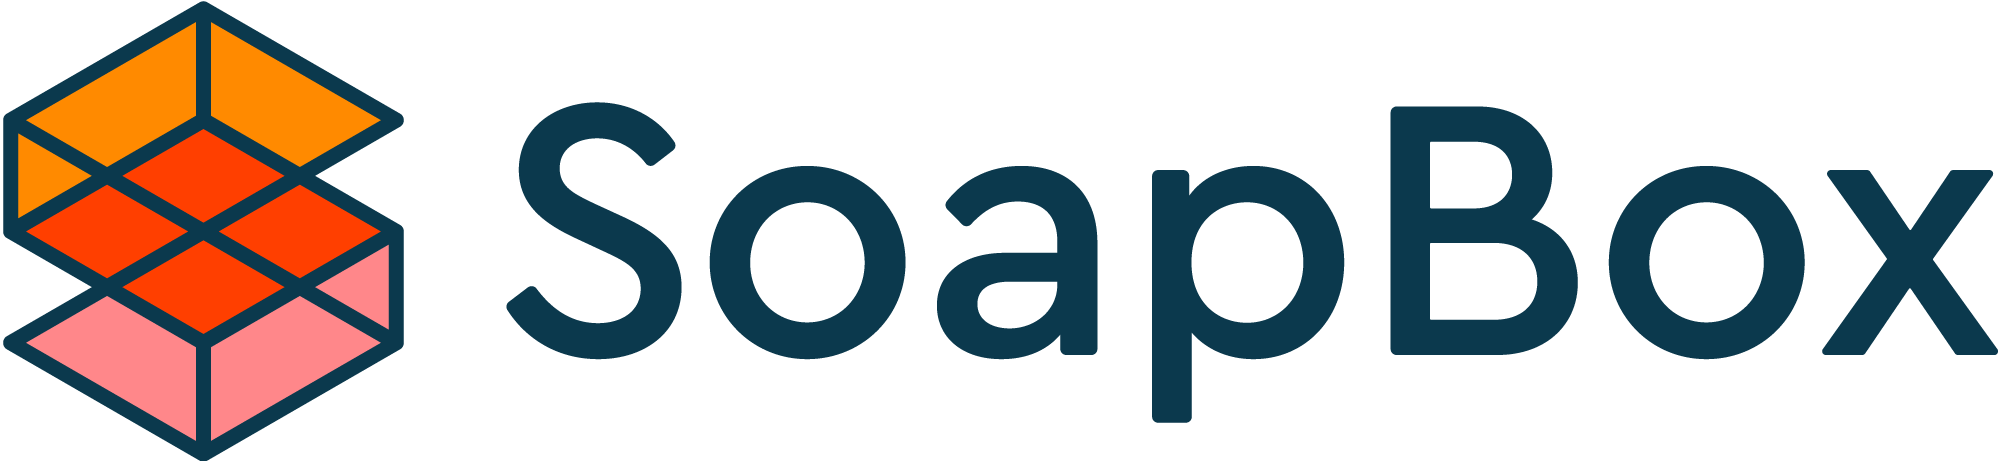 The SoapBox Labs logo.